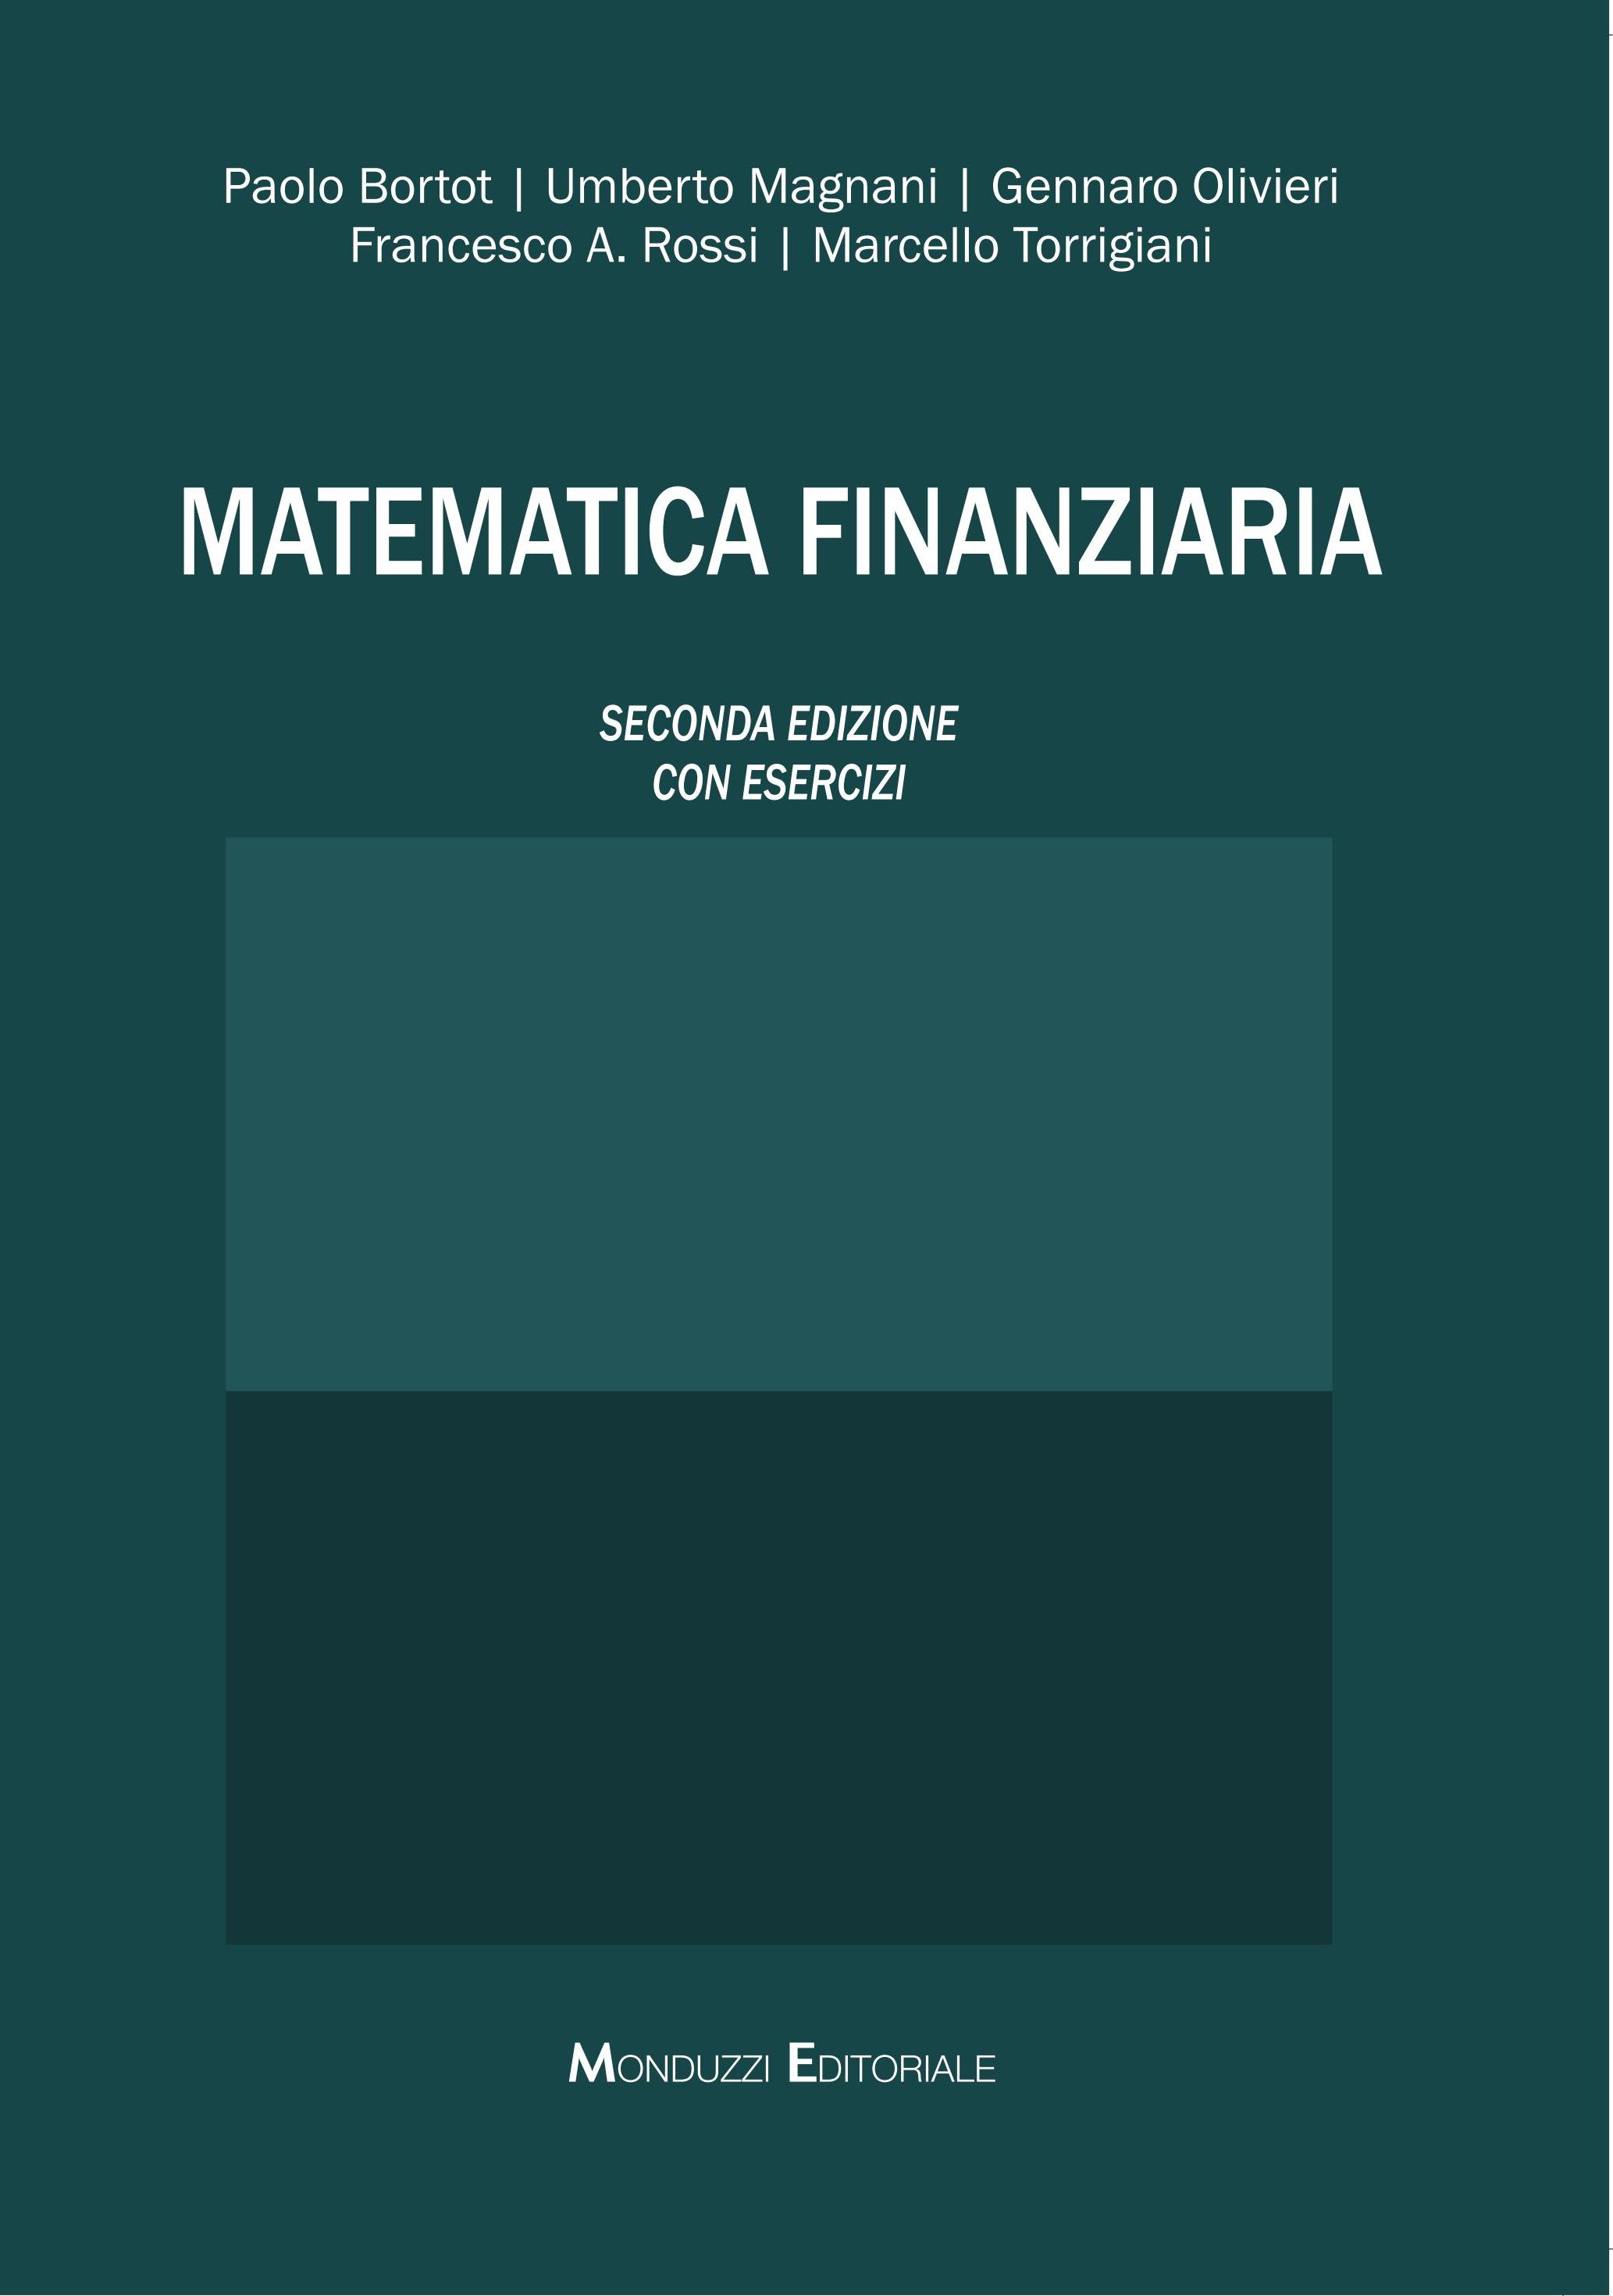 Matematica finanziaria - Monduzzi Editoriale